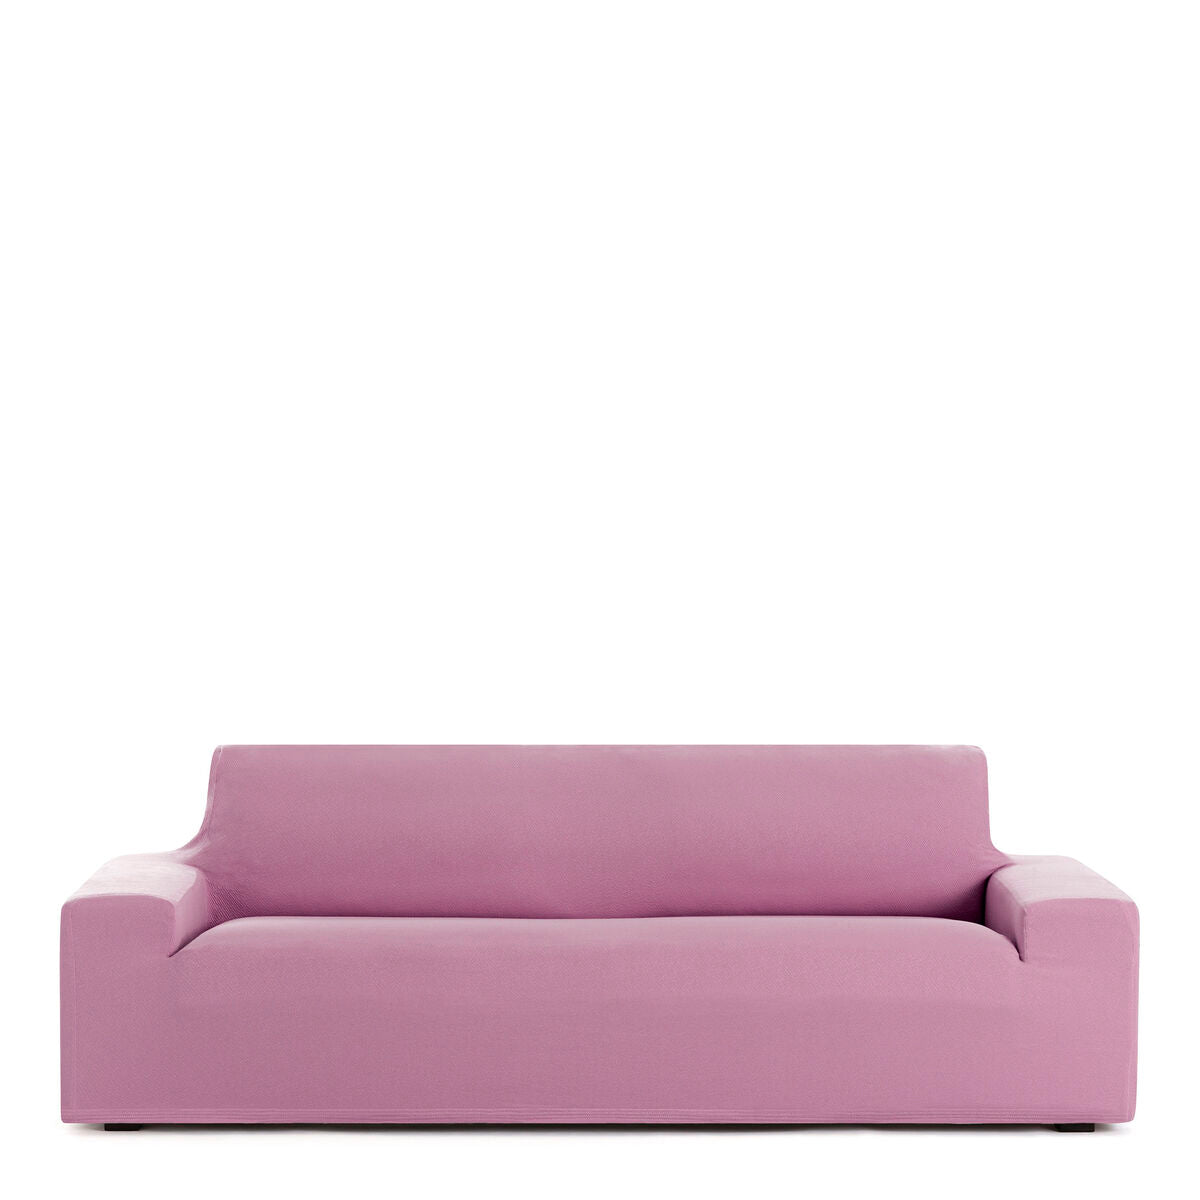 Copertina di divano Bronx Eysa rosa 70 x 110 x 170 cm